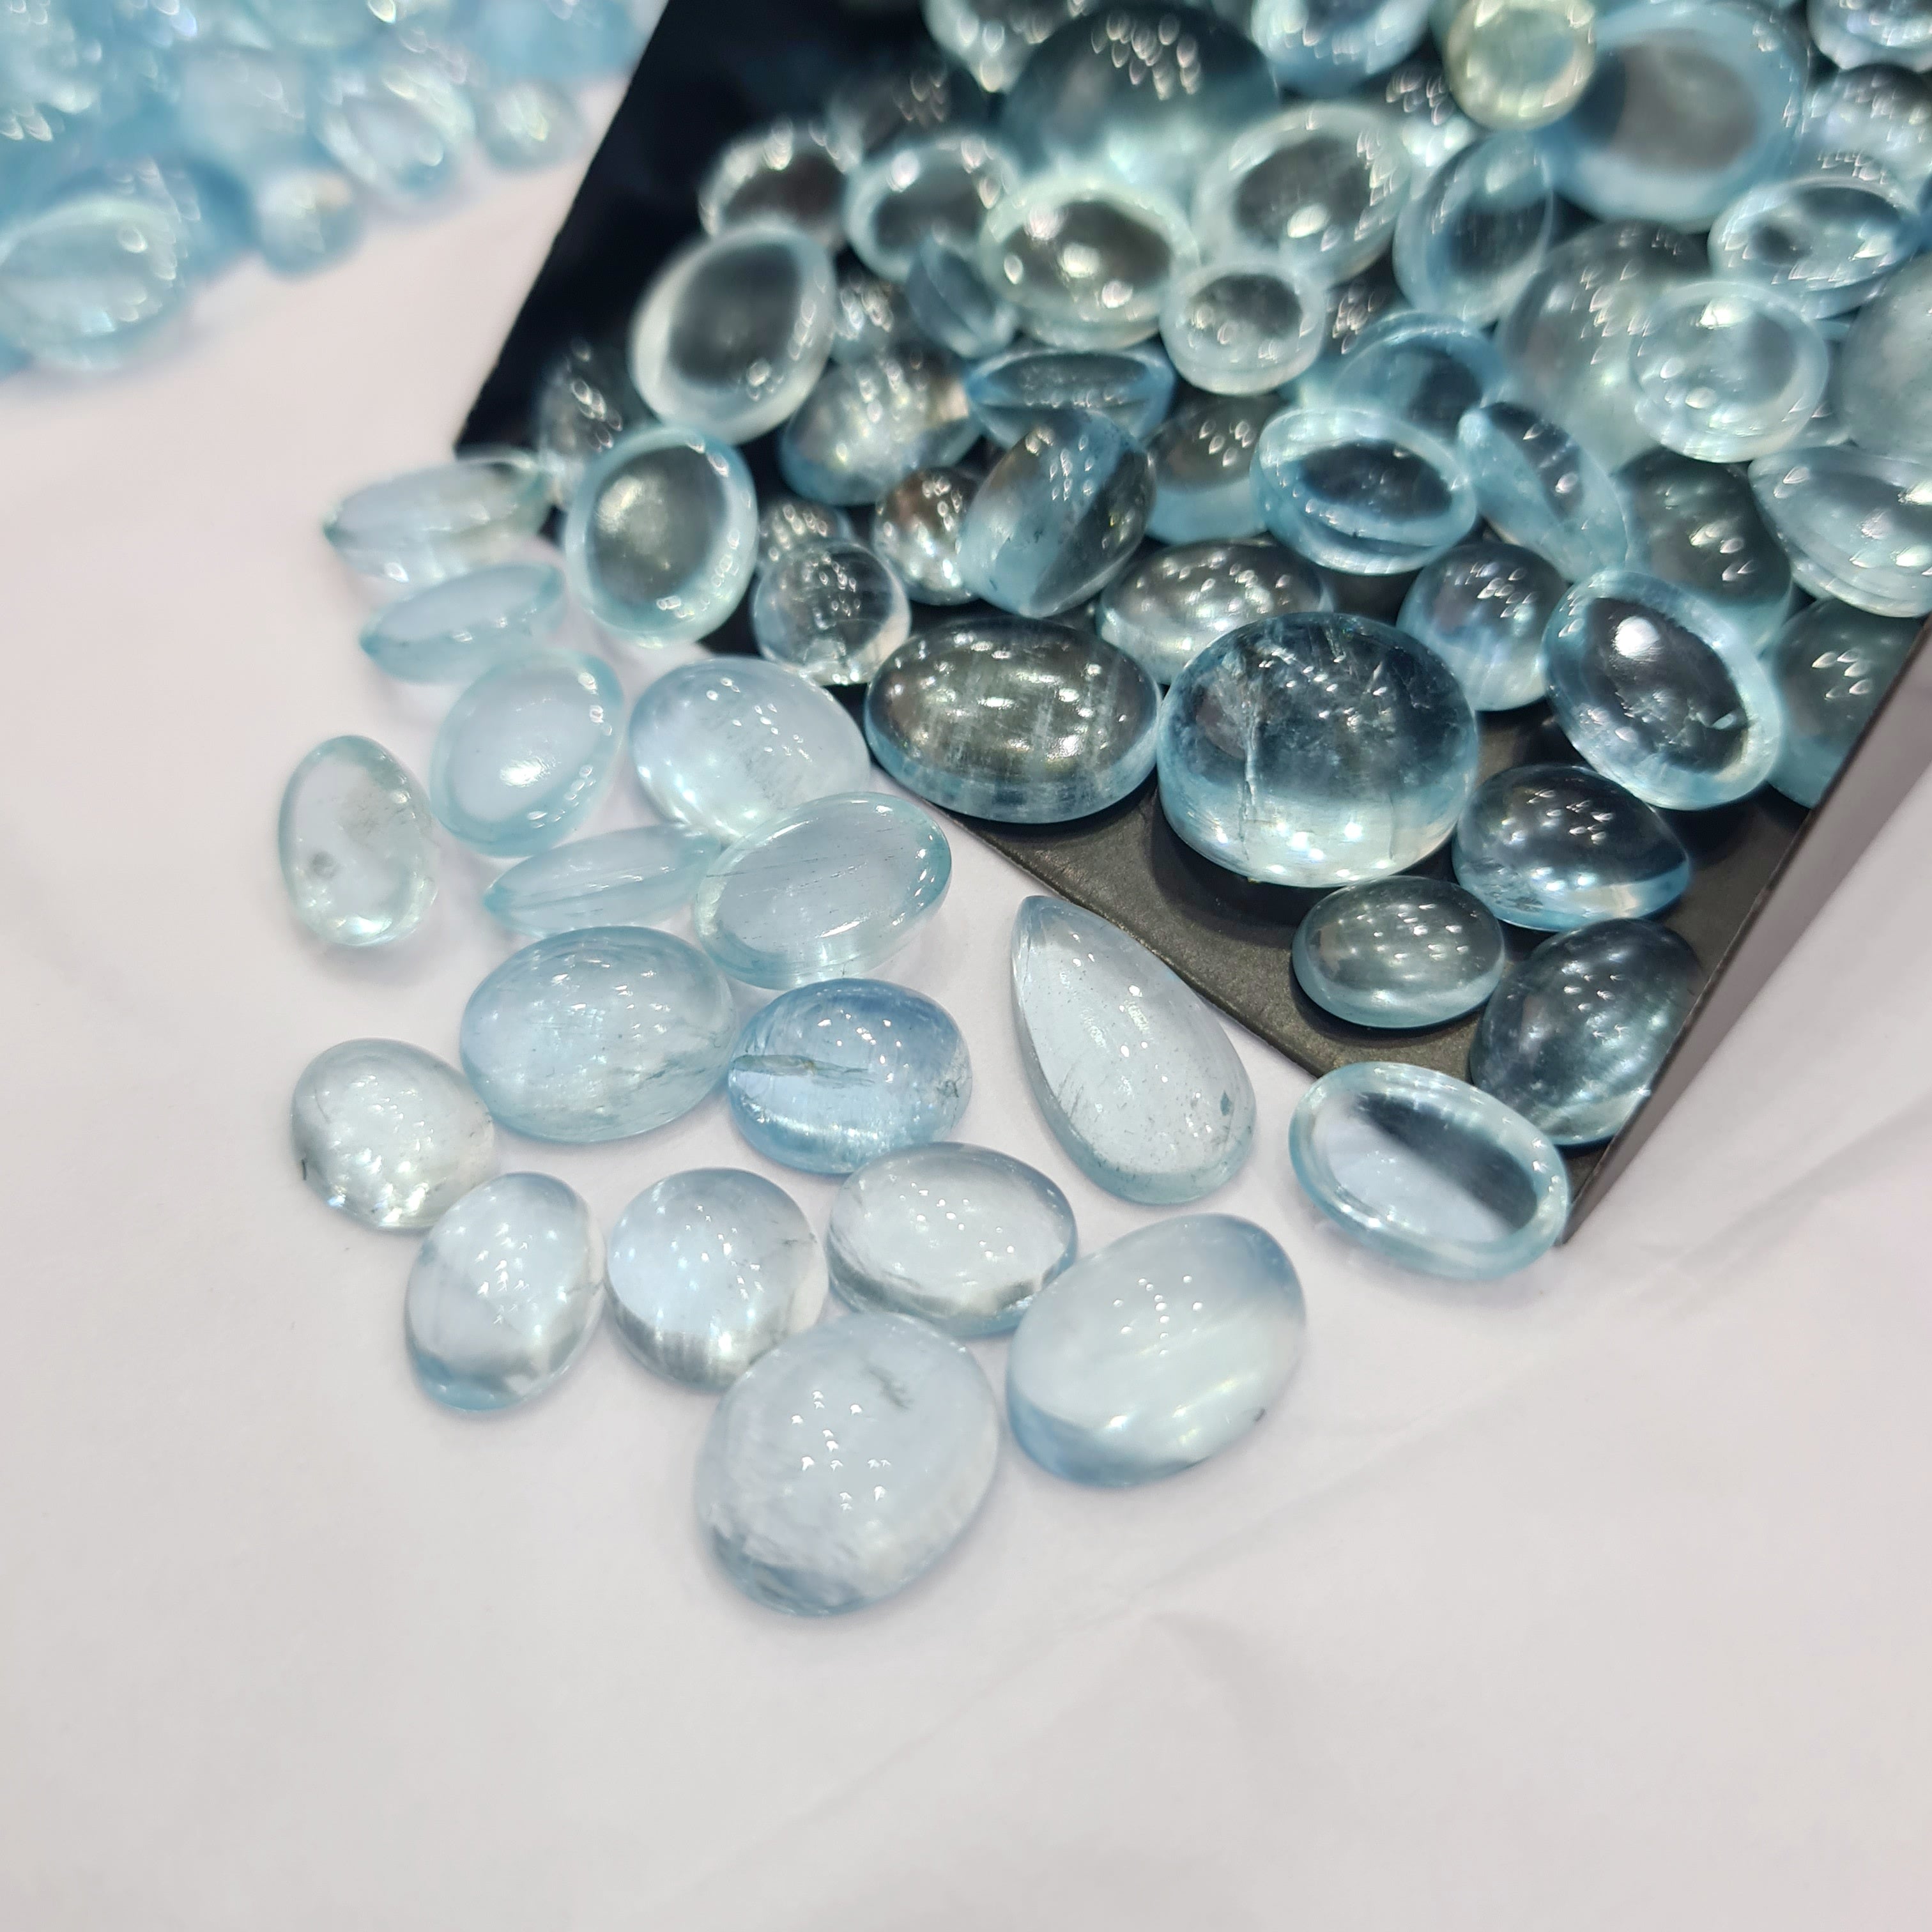 12 Pieces Natural Aquamarine Cabochon Gemstones , Mix Shape Size: 5-13mm - The LabradoriteKing